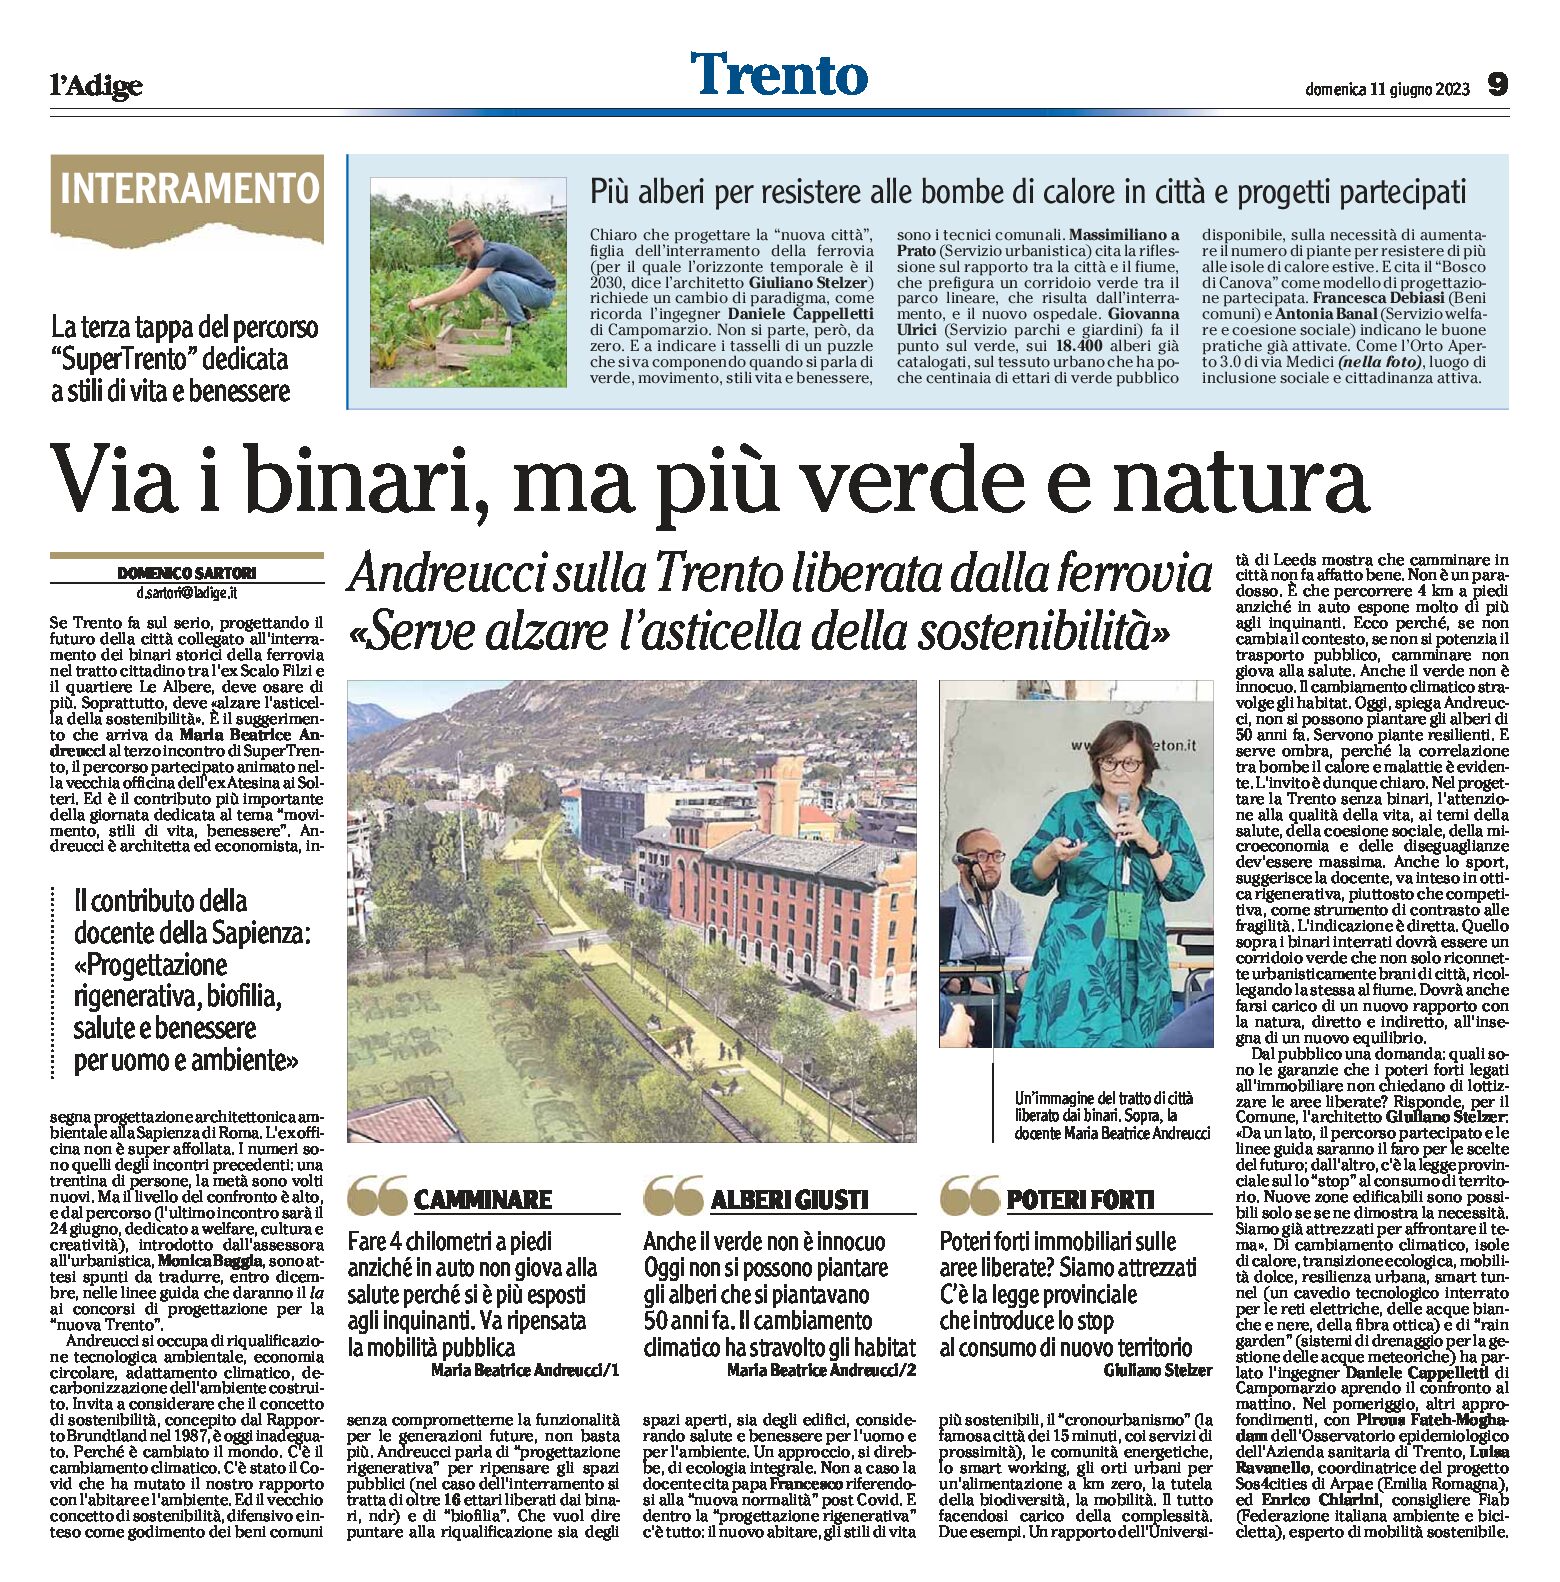 Trento: via i binari, ma più verde e natura